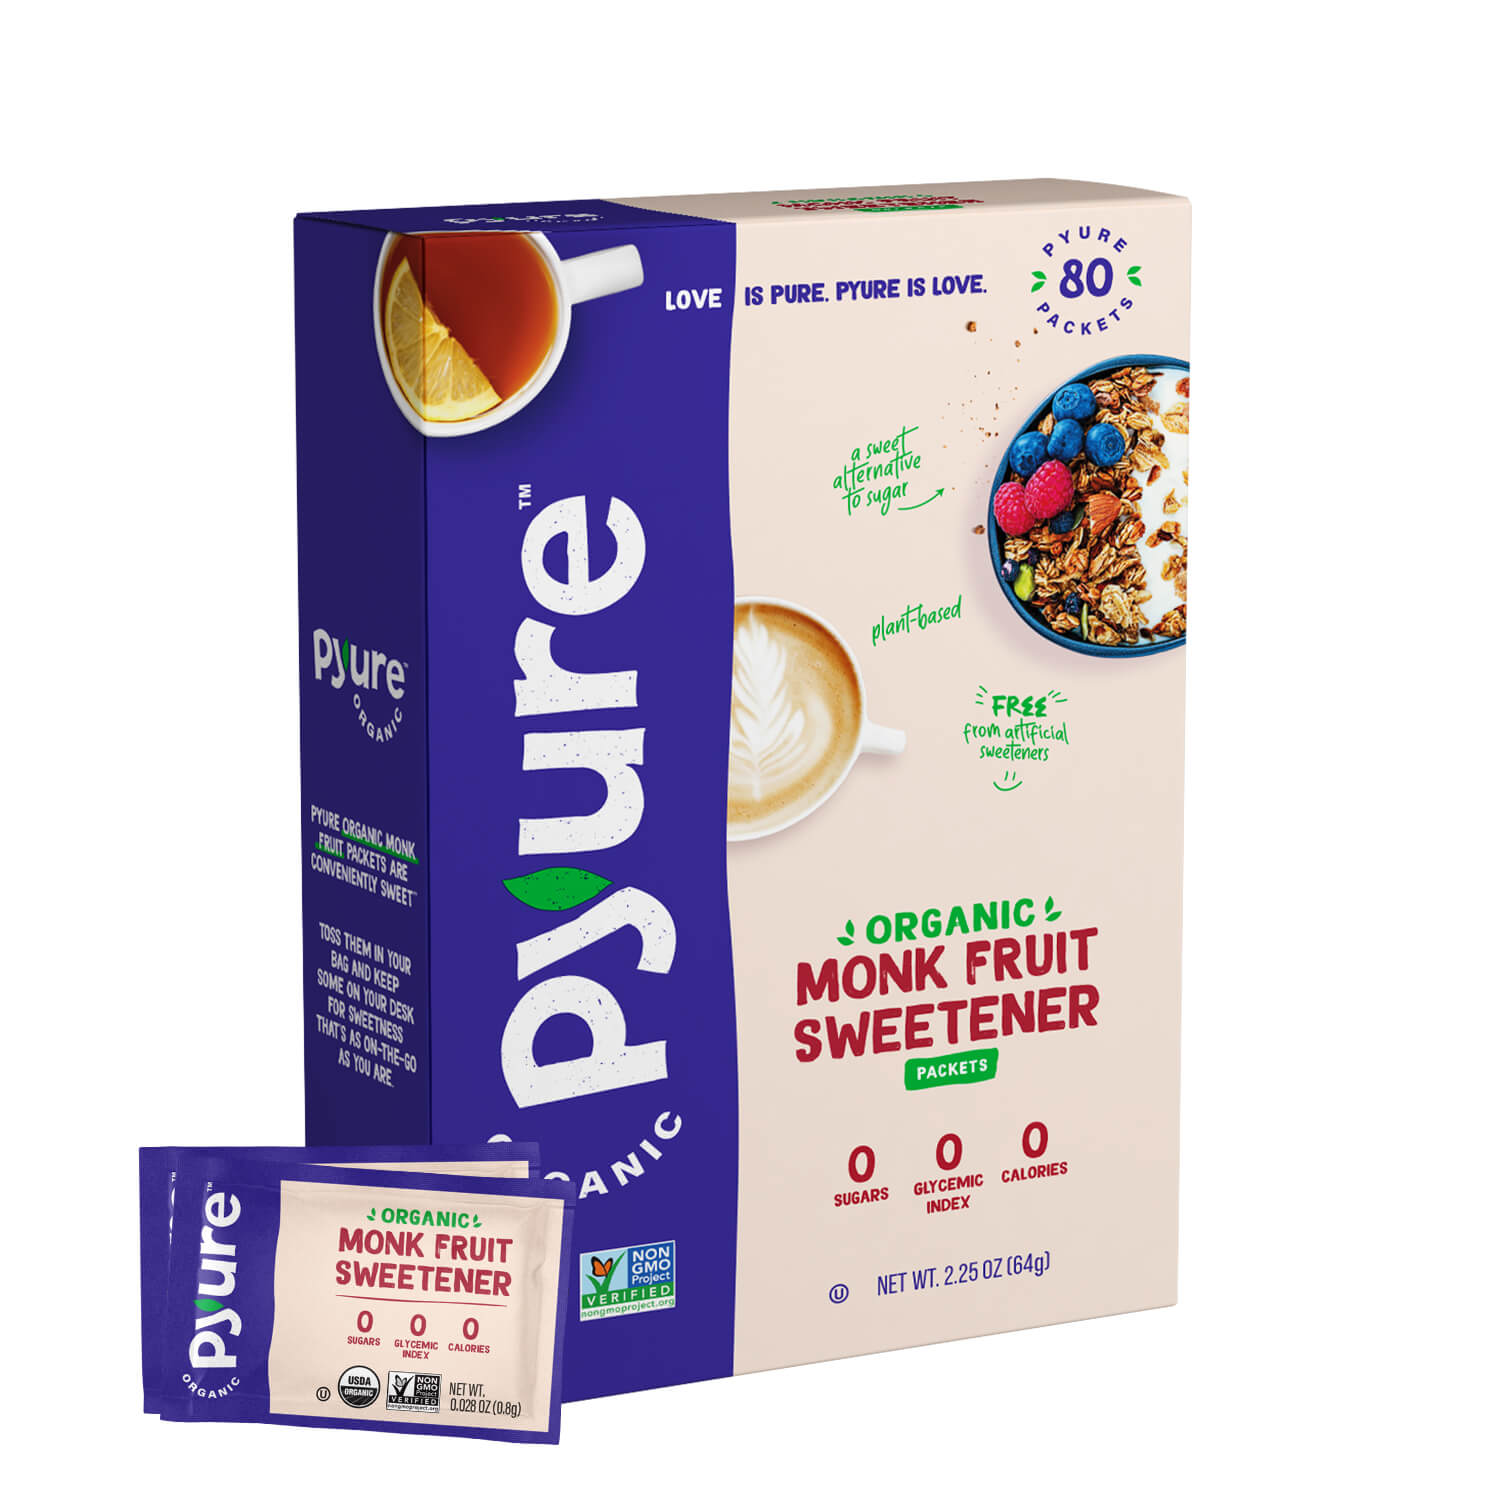 Organic monk fruit sweetener packets